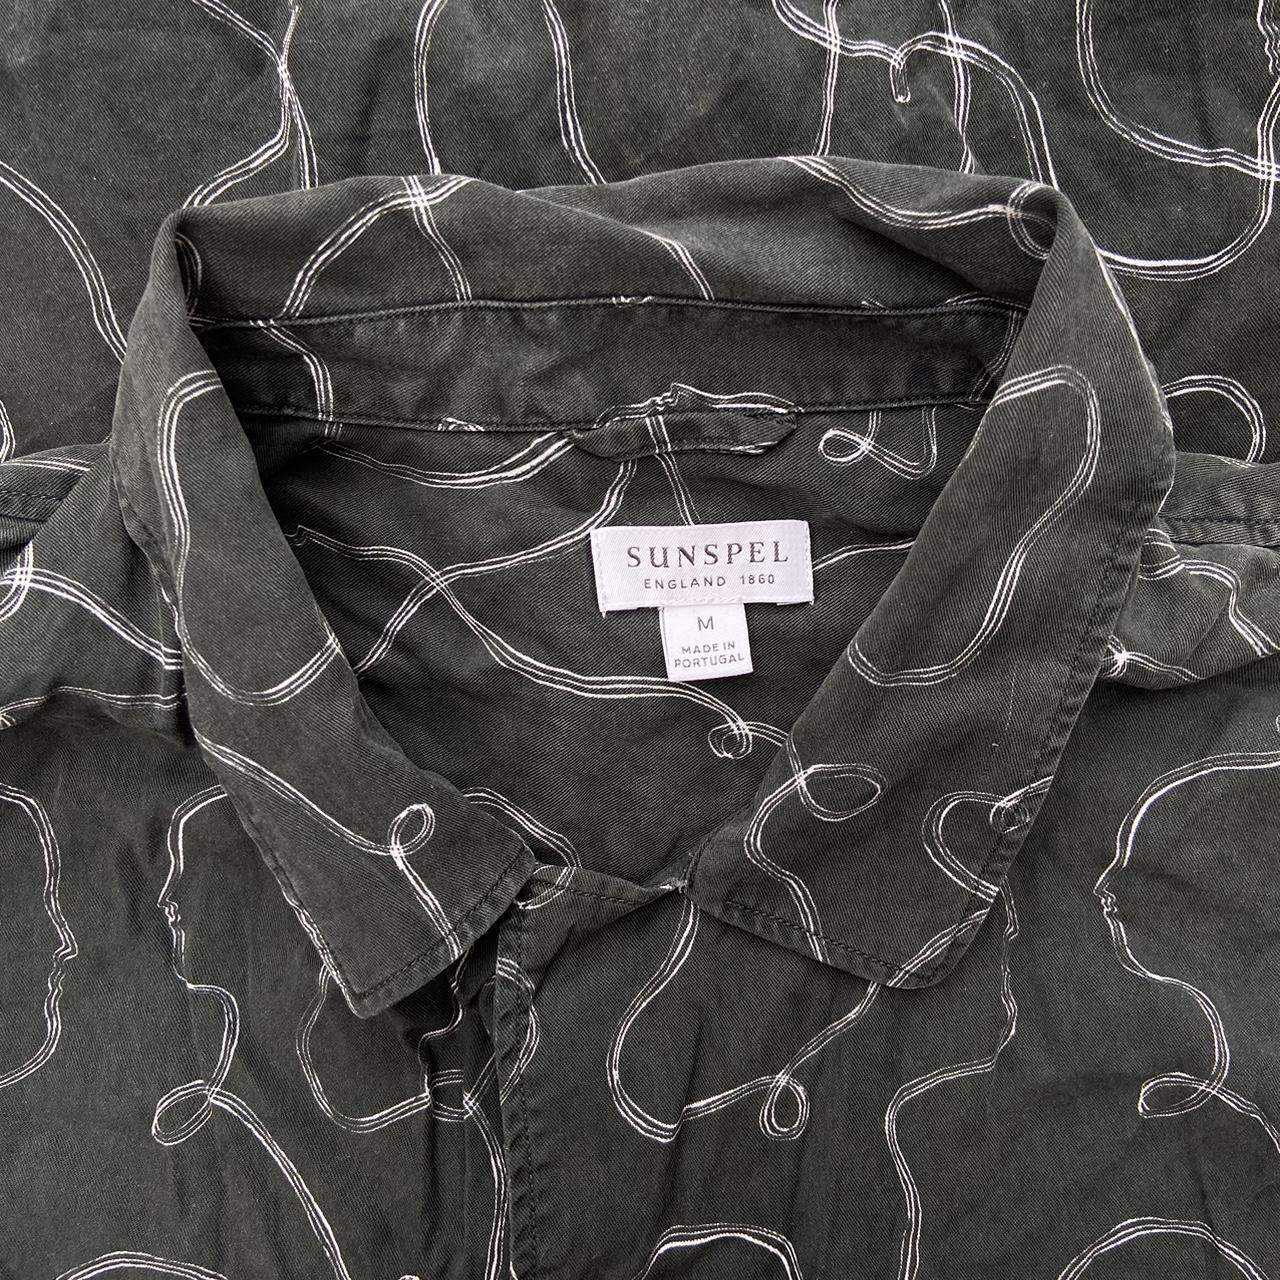 Sunspel Collaboration PJ Set Size Medium Shirt... - Depop